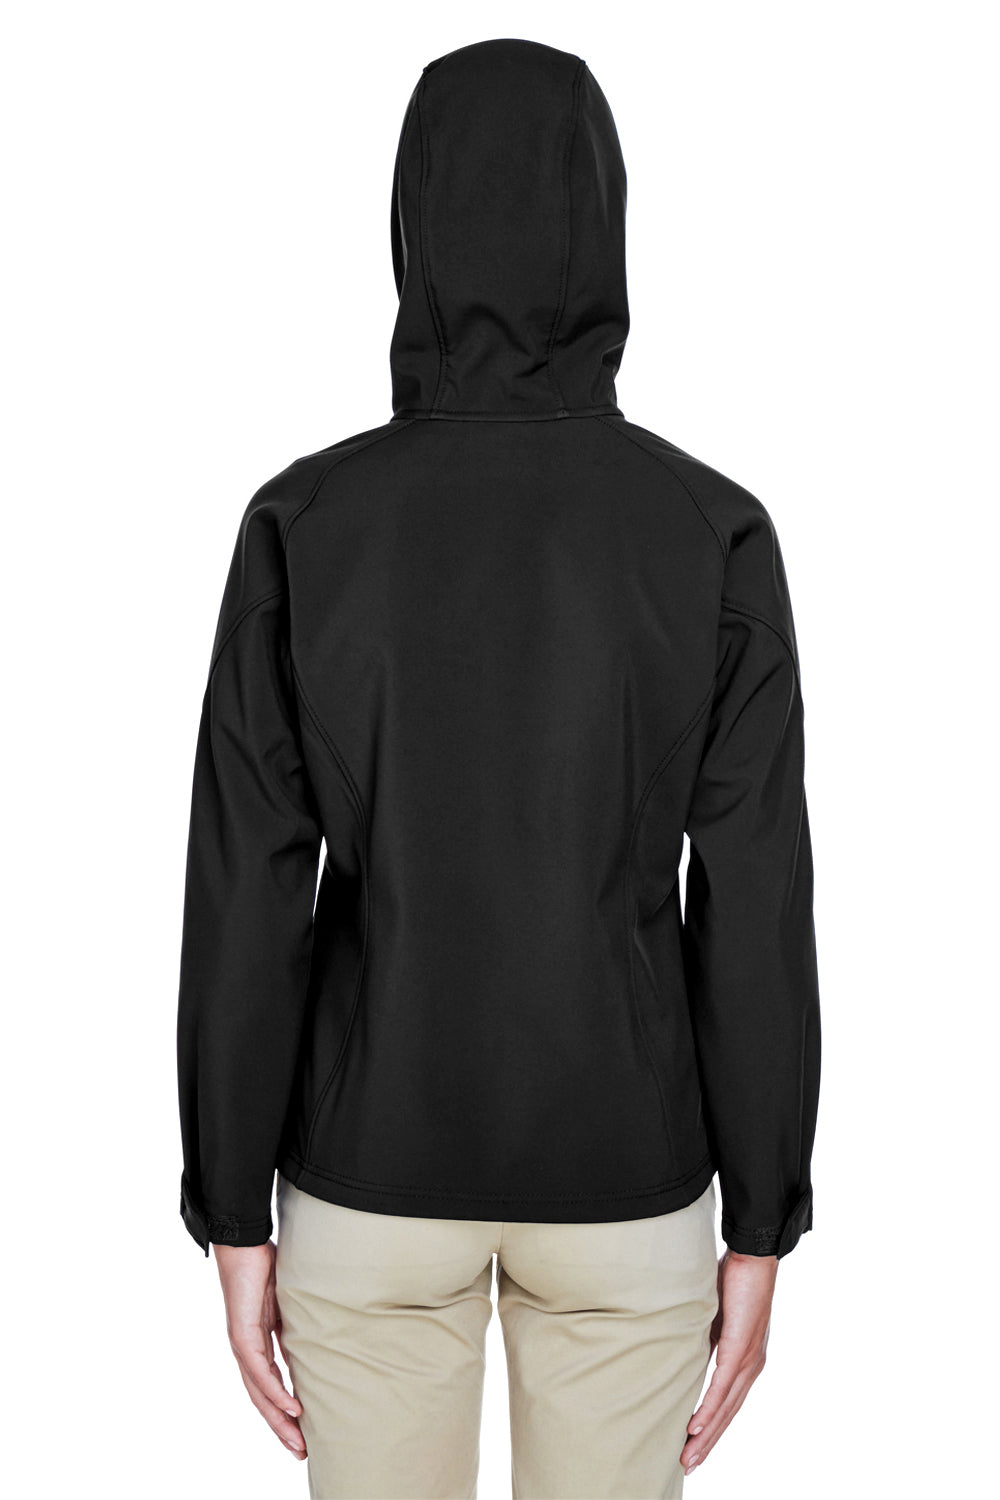 North End 78166 Womens Prospect Water Resistant Full Zip Hooded Jacket Black Back